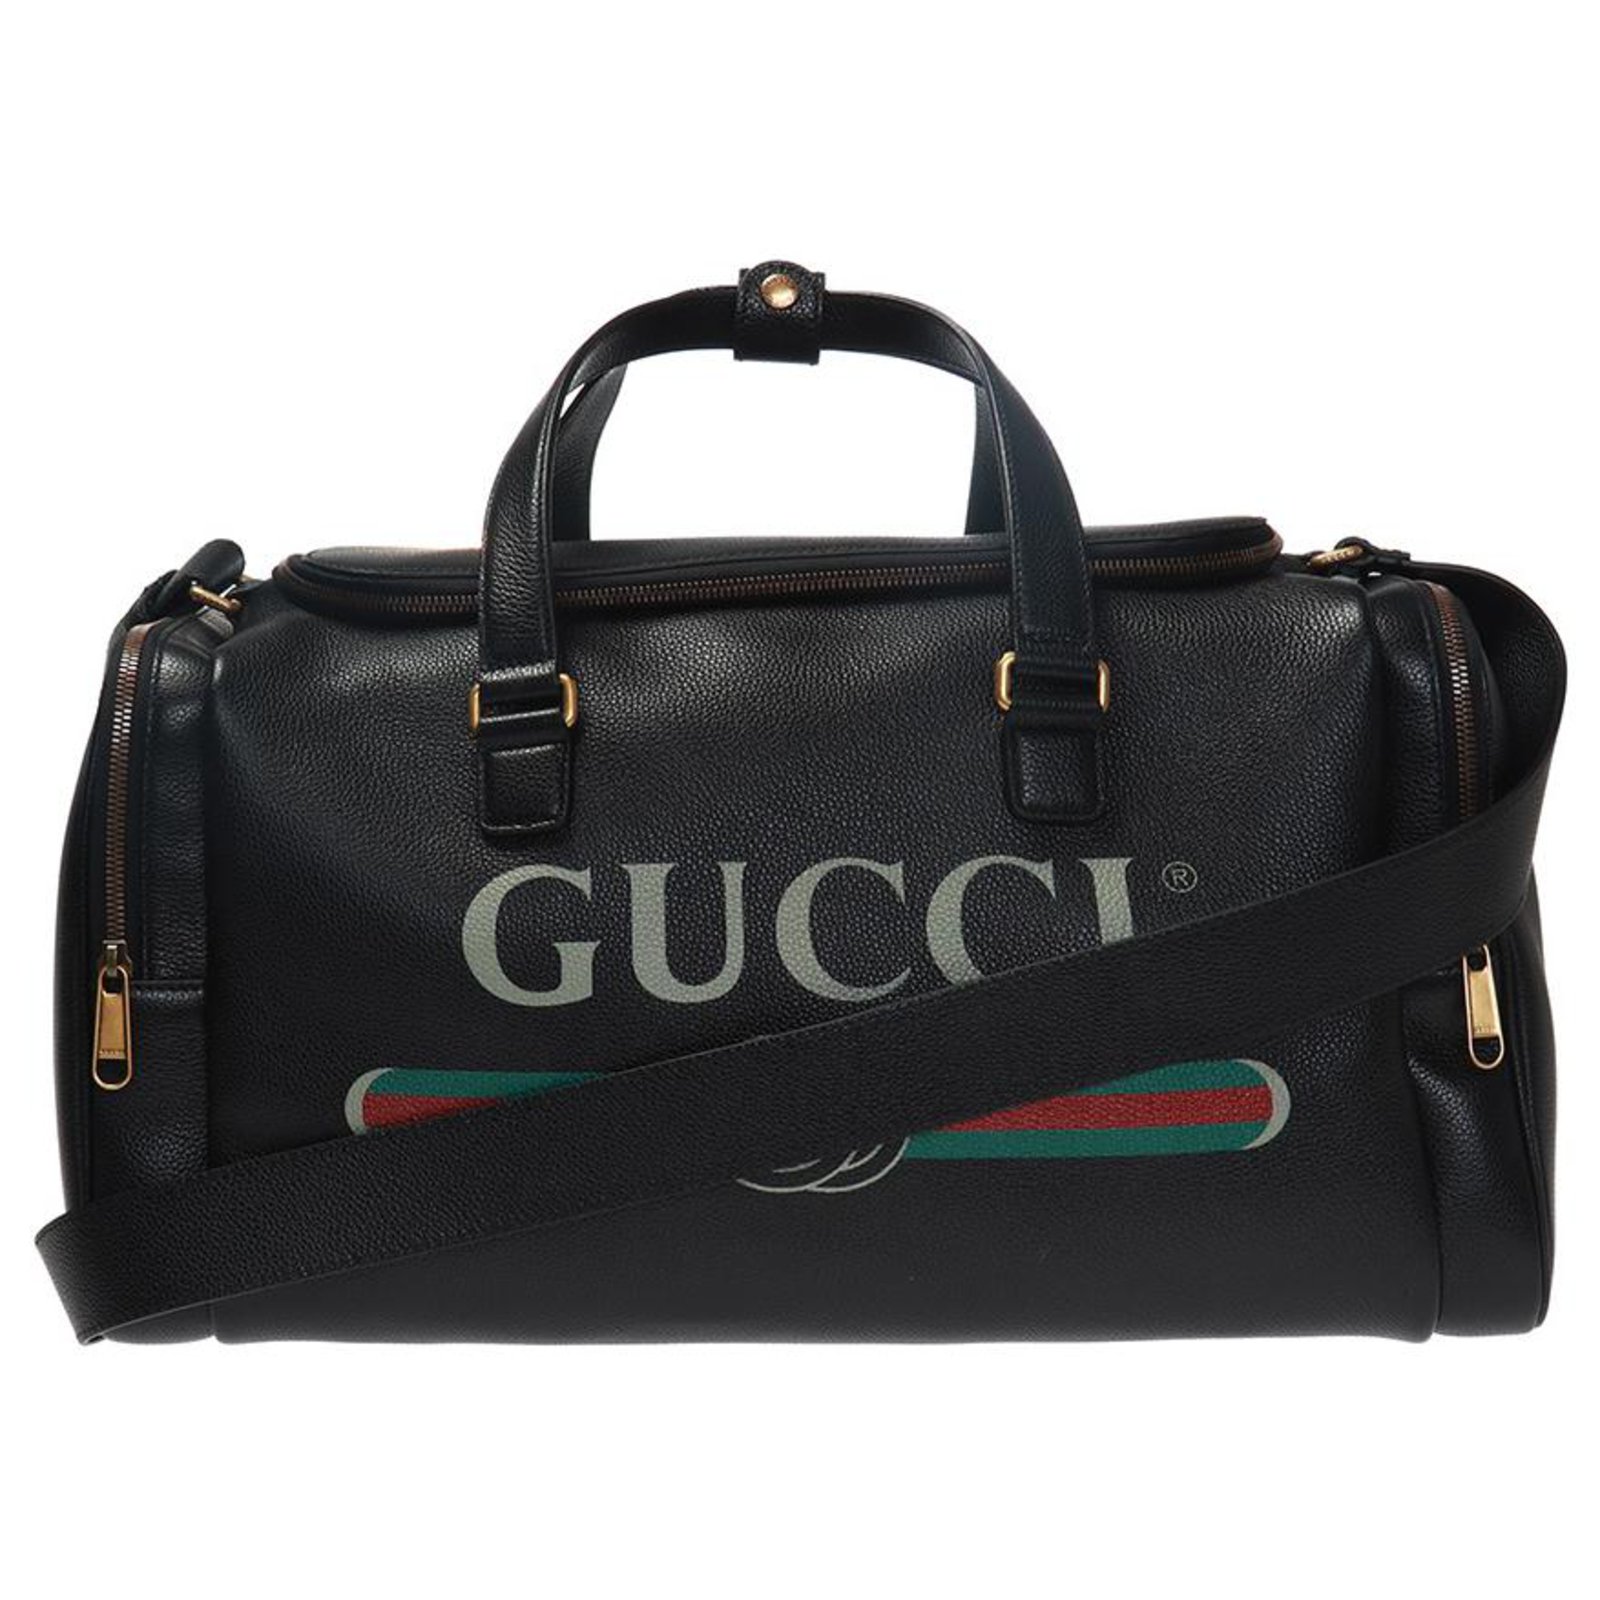 gucci luggage bag